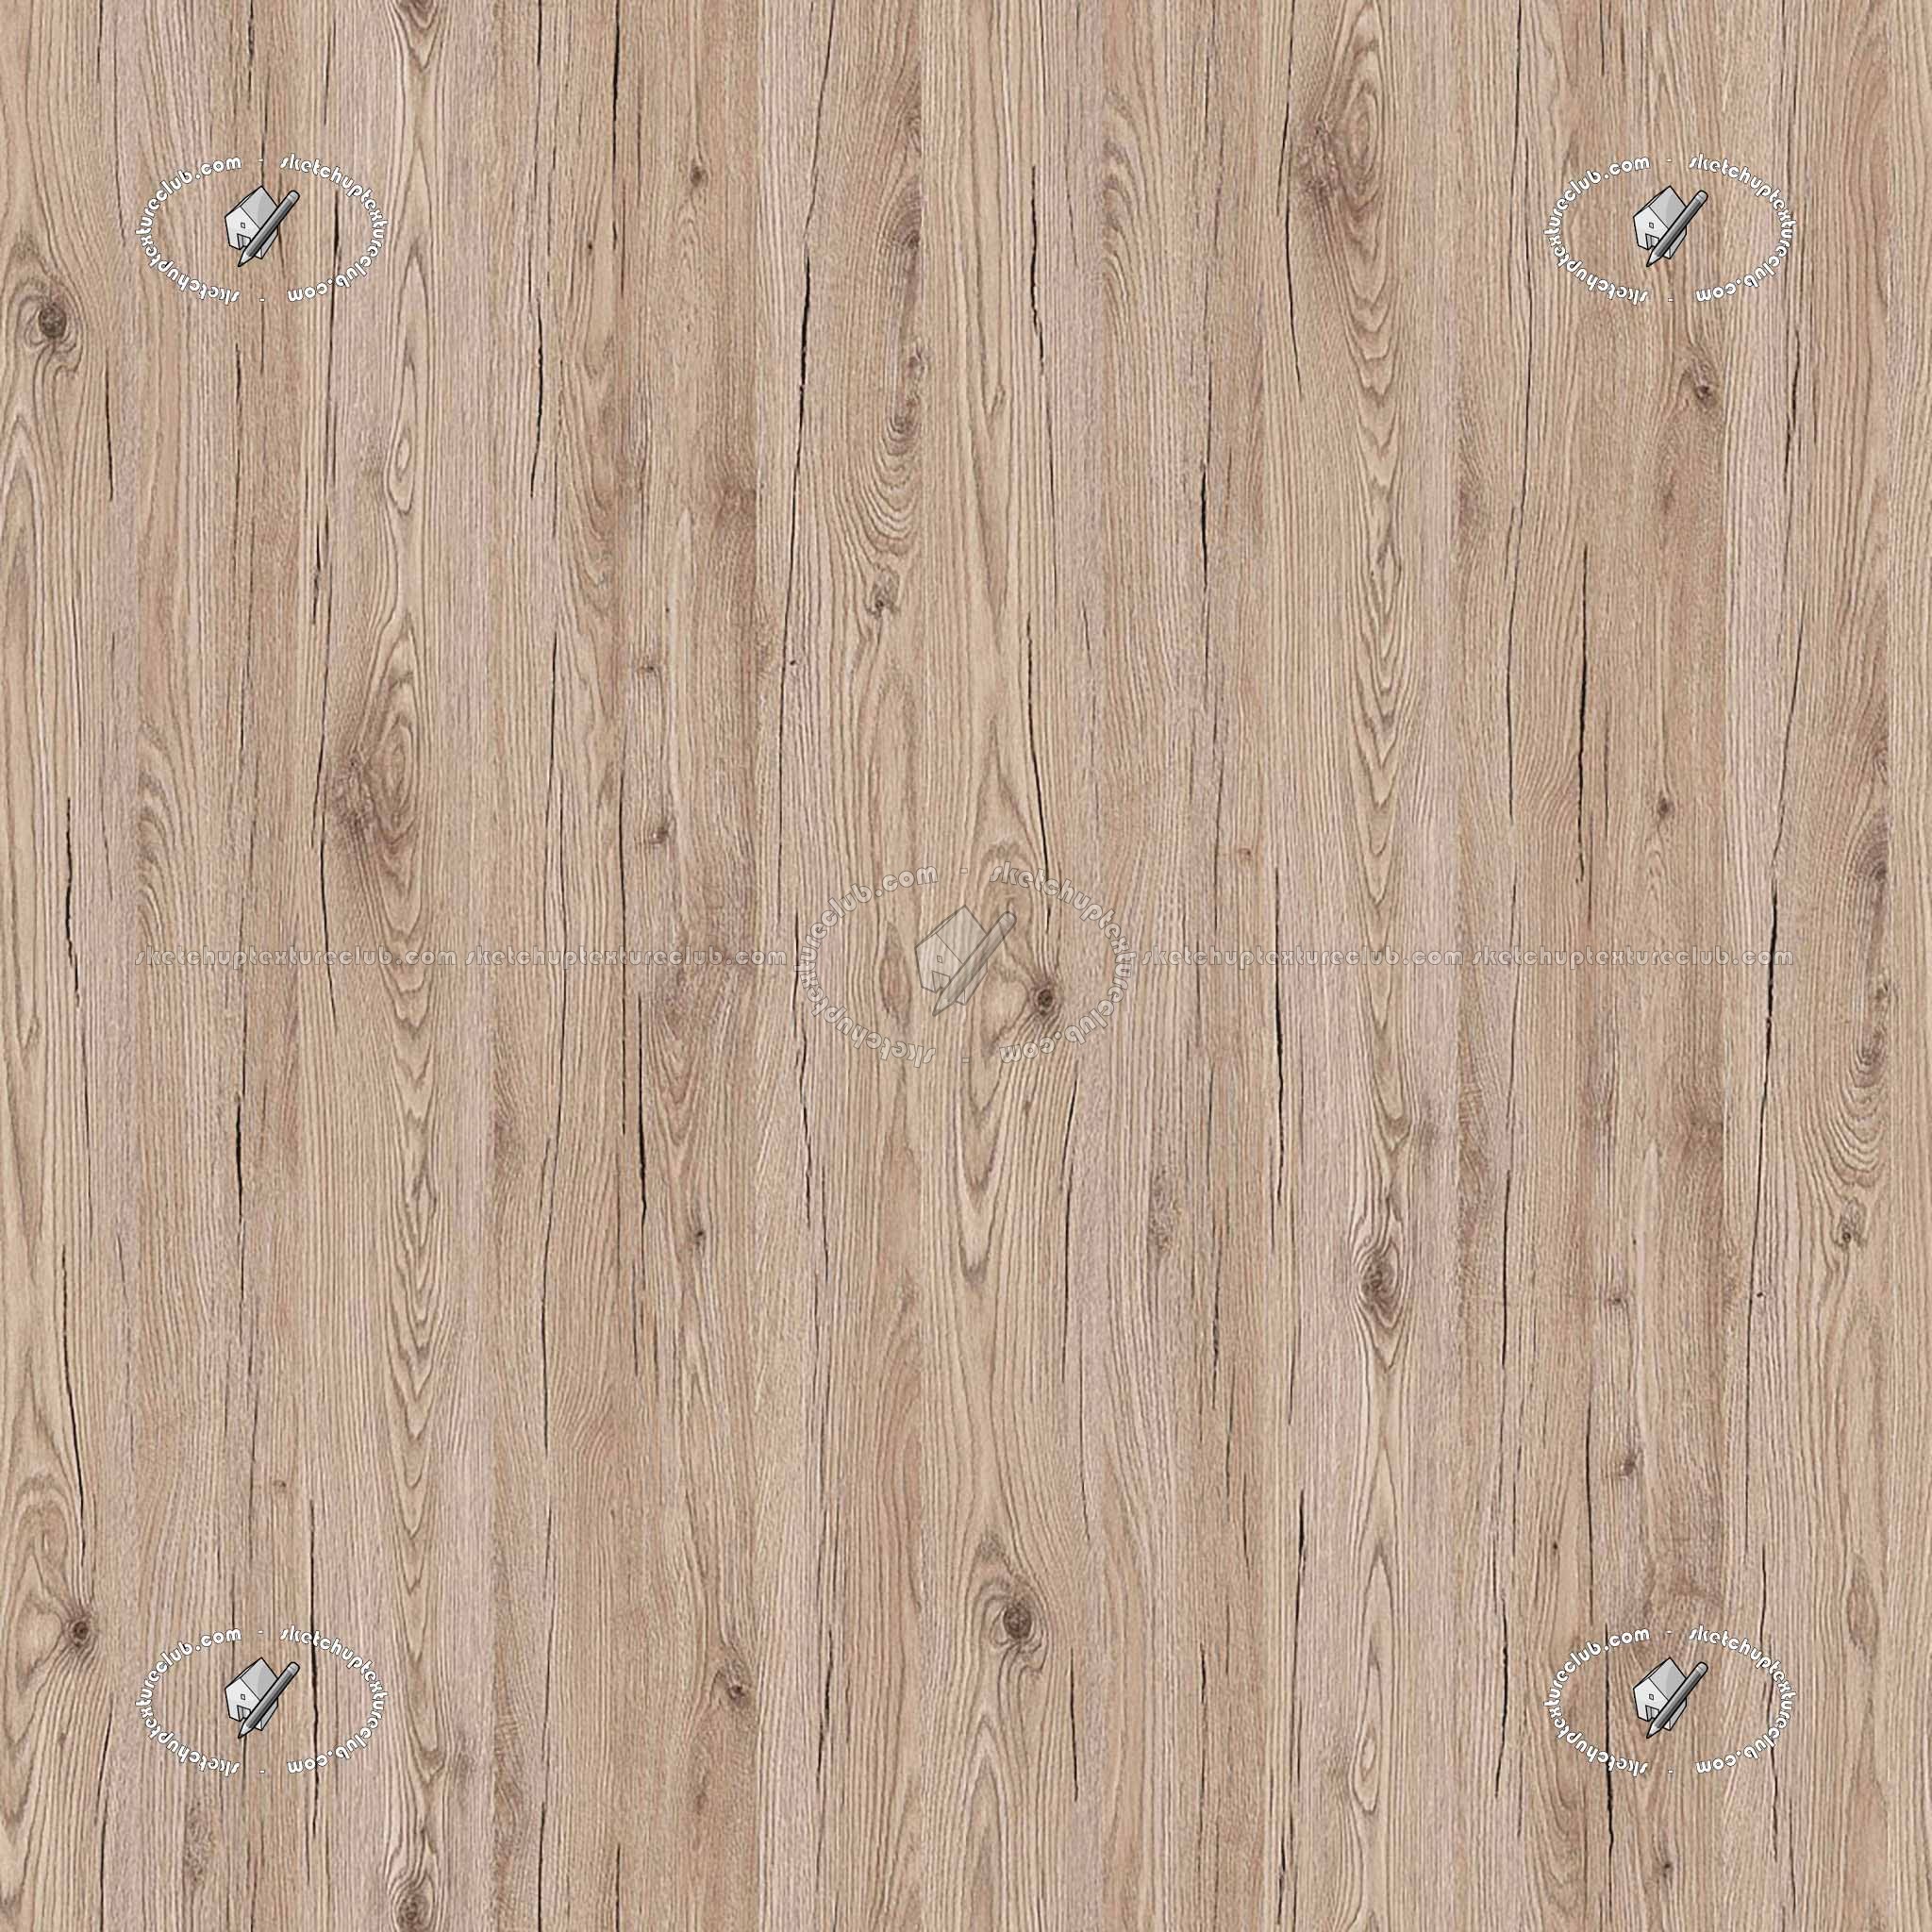 Raw wood textures